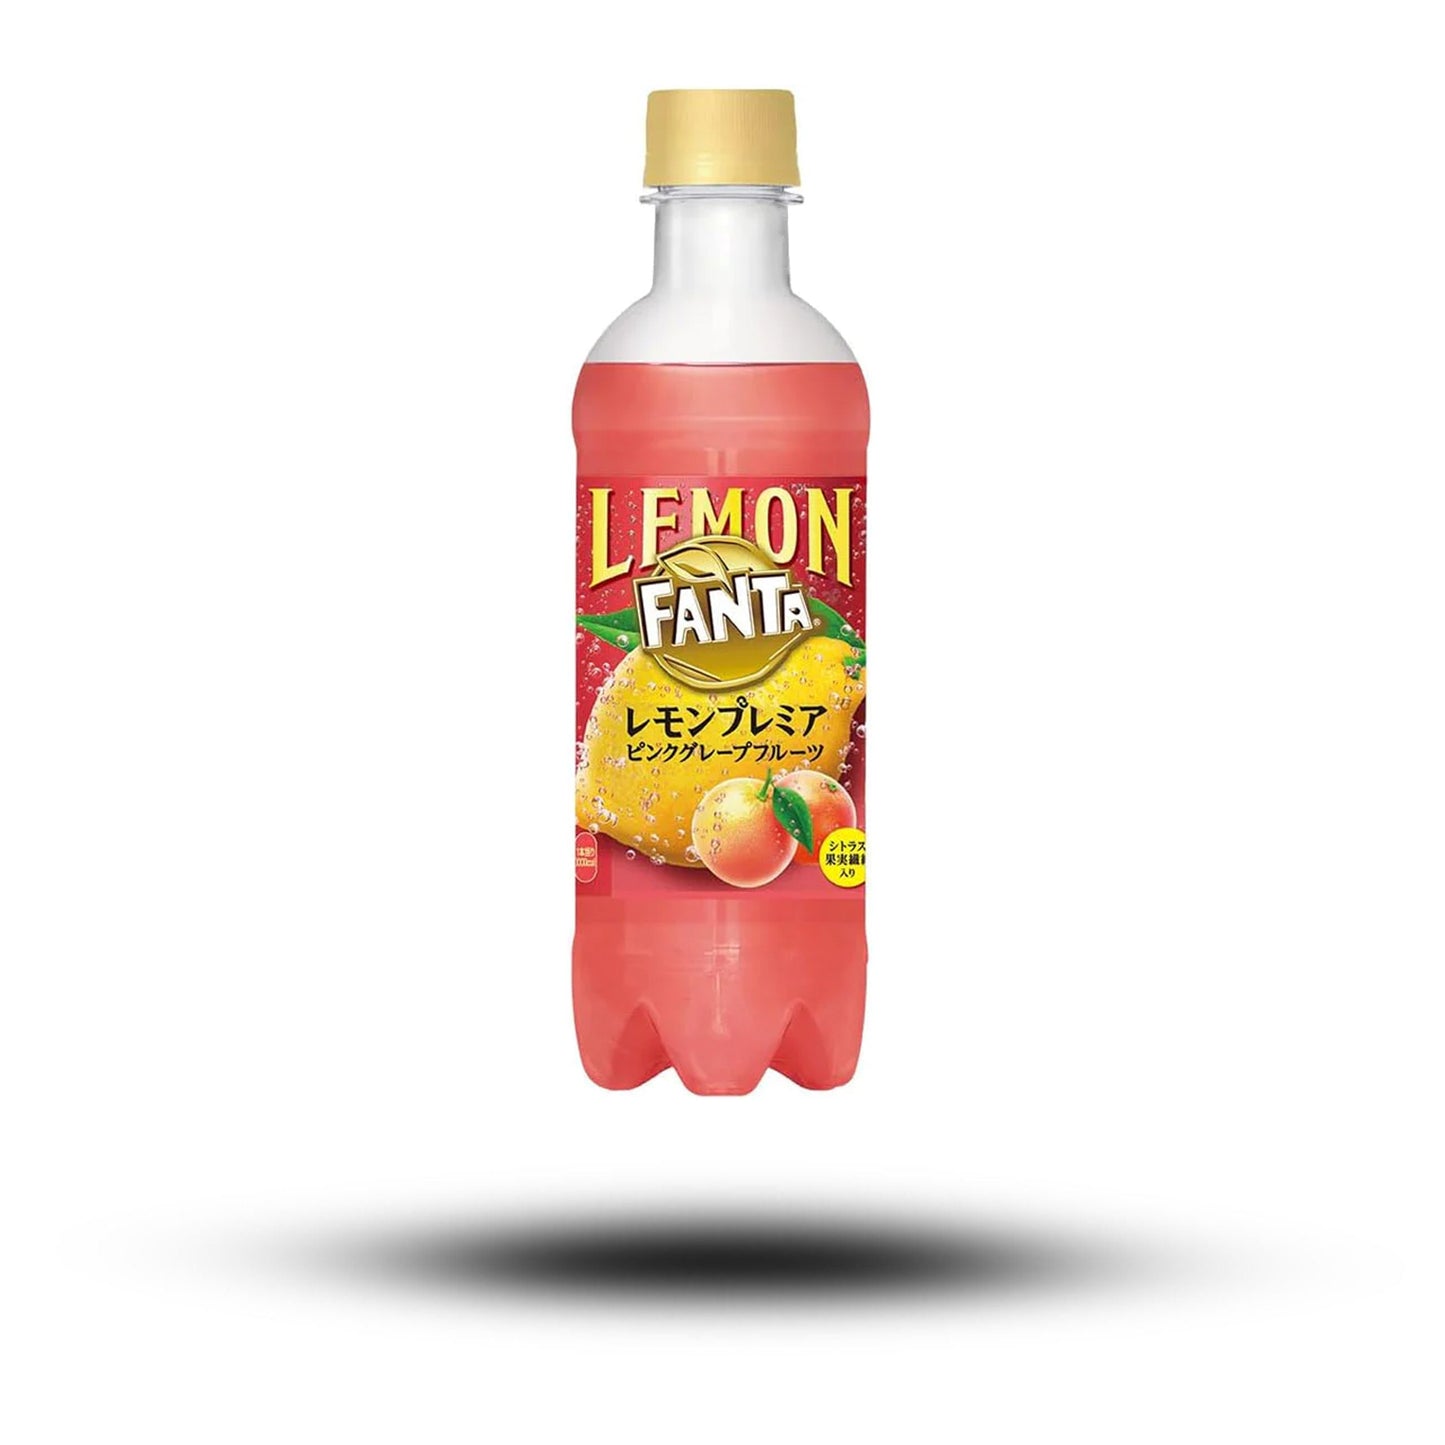 Fanta Premier Lemon Pink Grapefruit 380ml Limited!  MHD:27.12.23